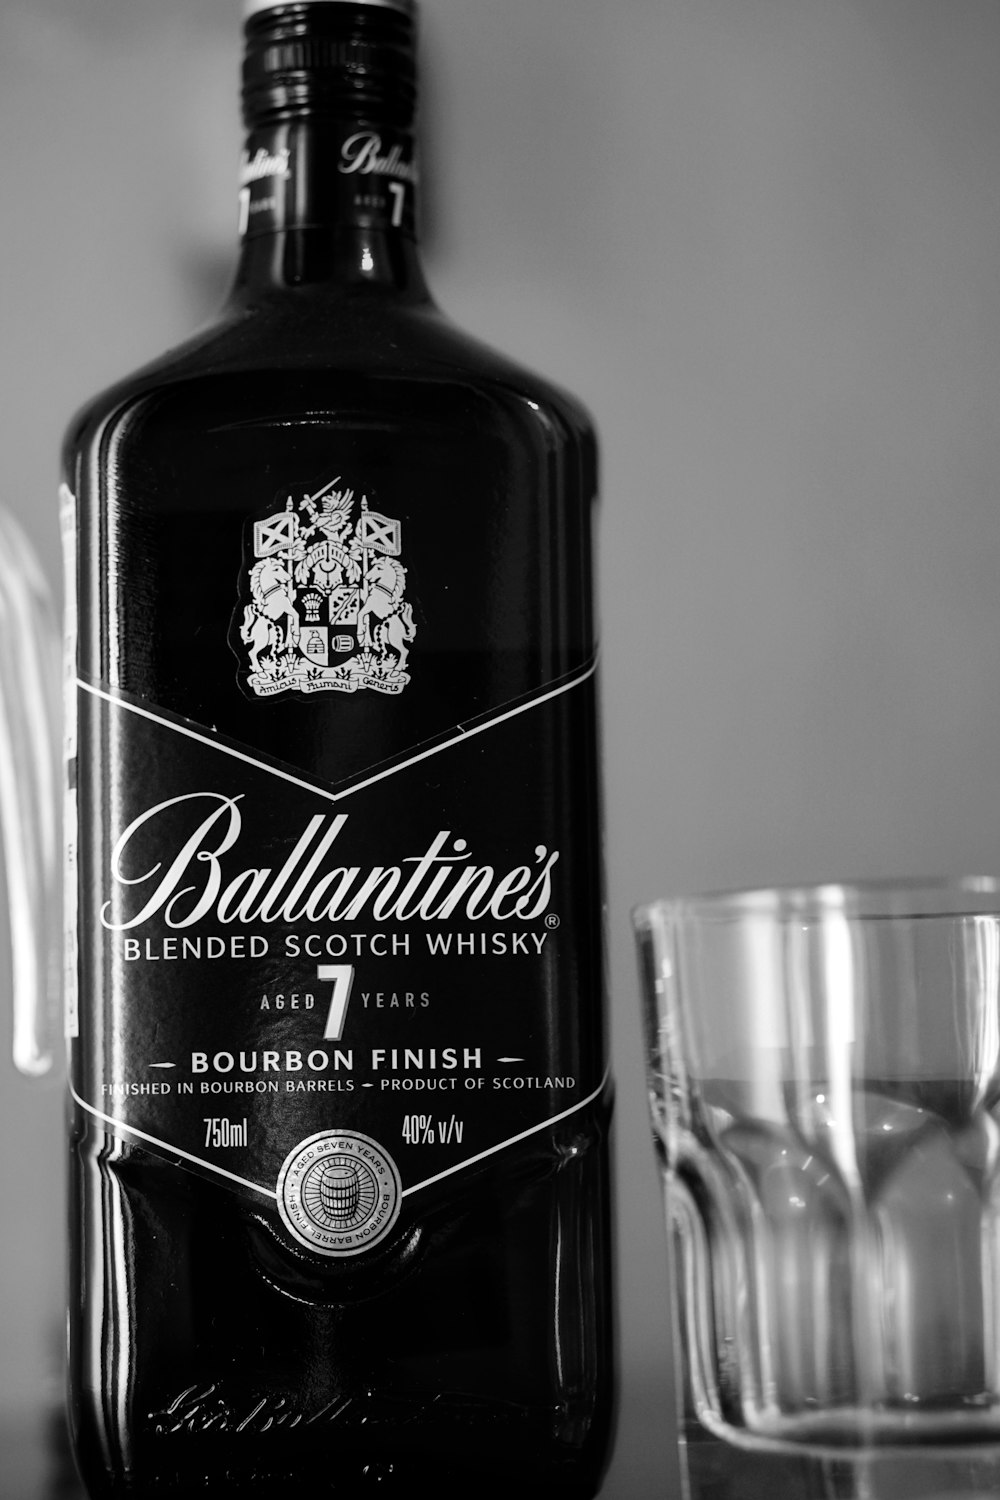 a bottle of ballantine's blended scotch whisky next to a shot glass